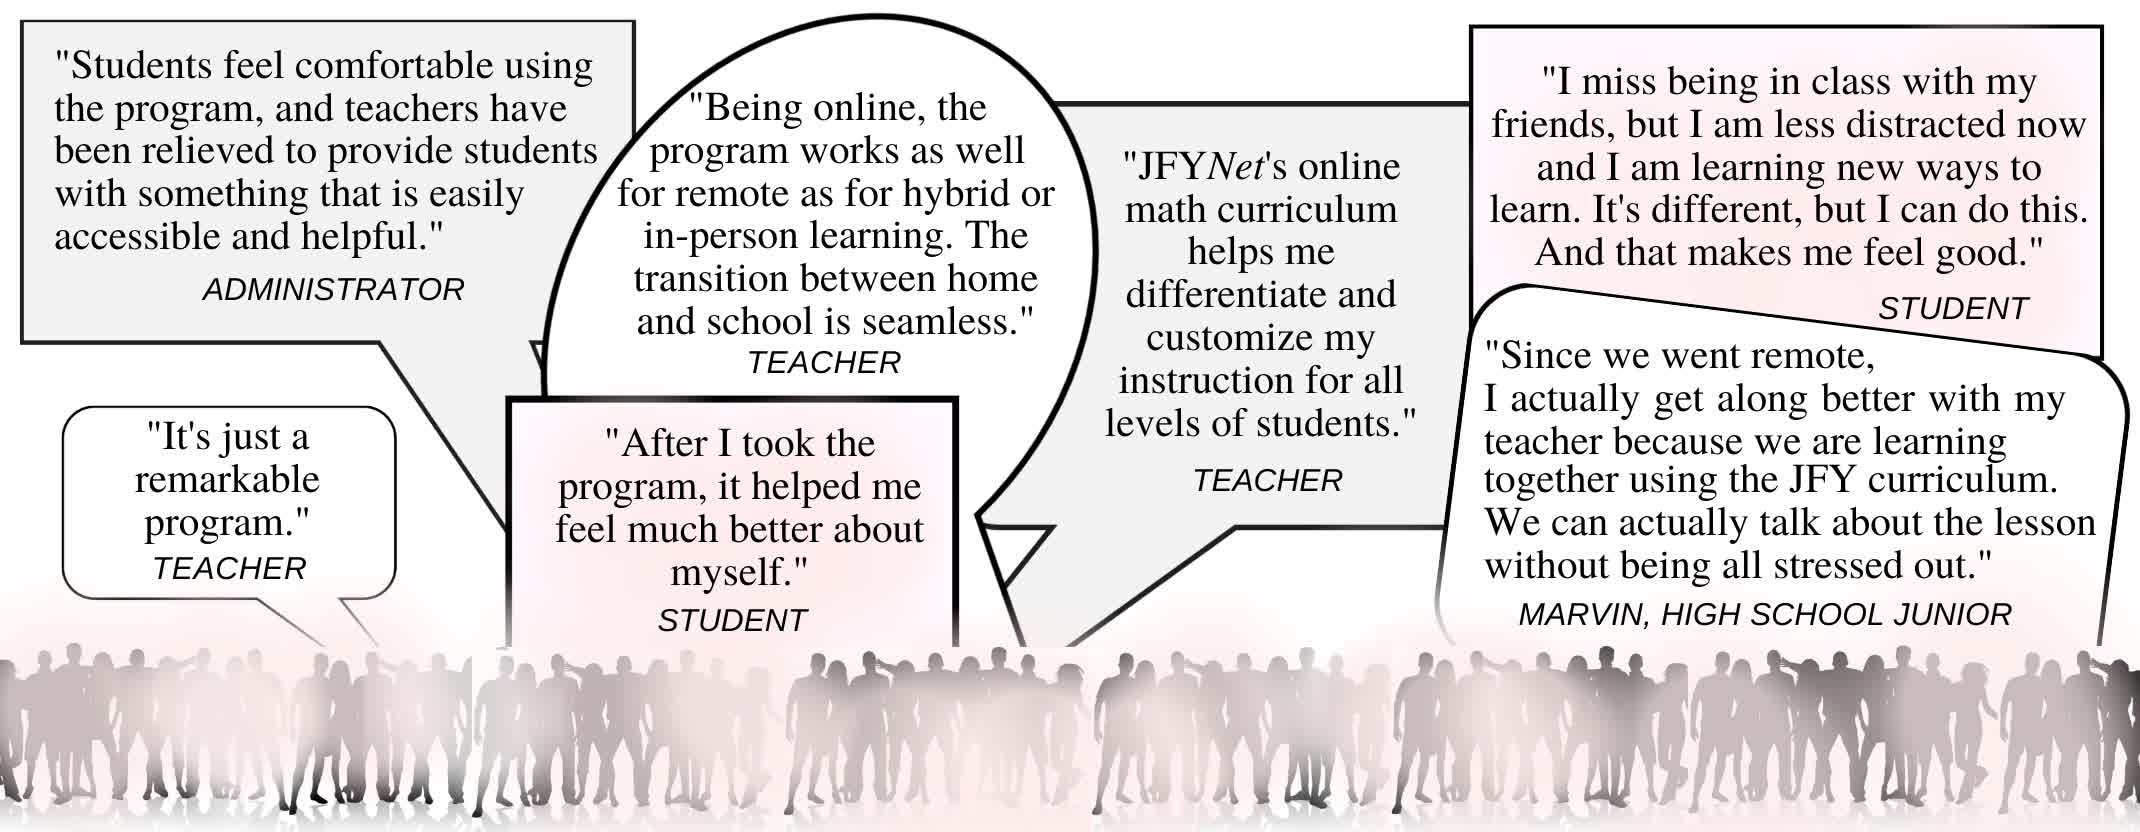 Student Teacher testimonials of JFY's online academic support